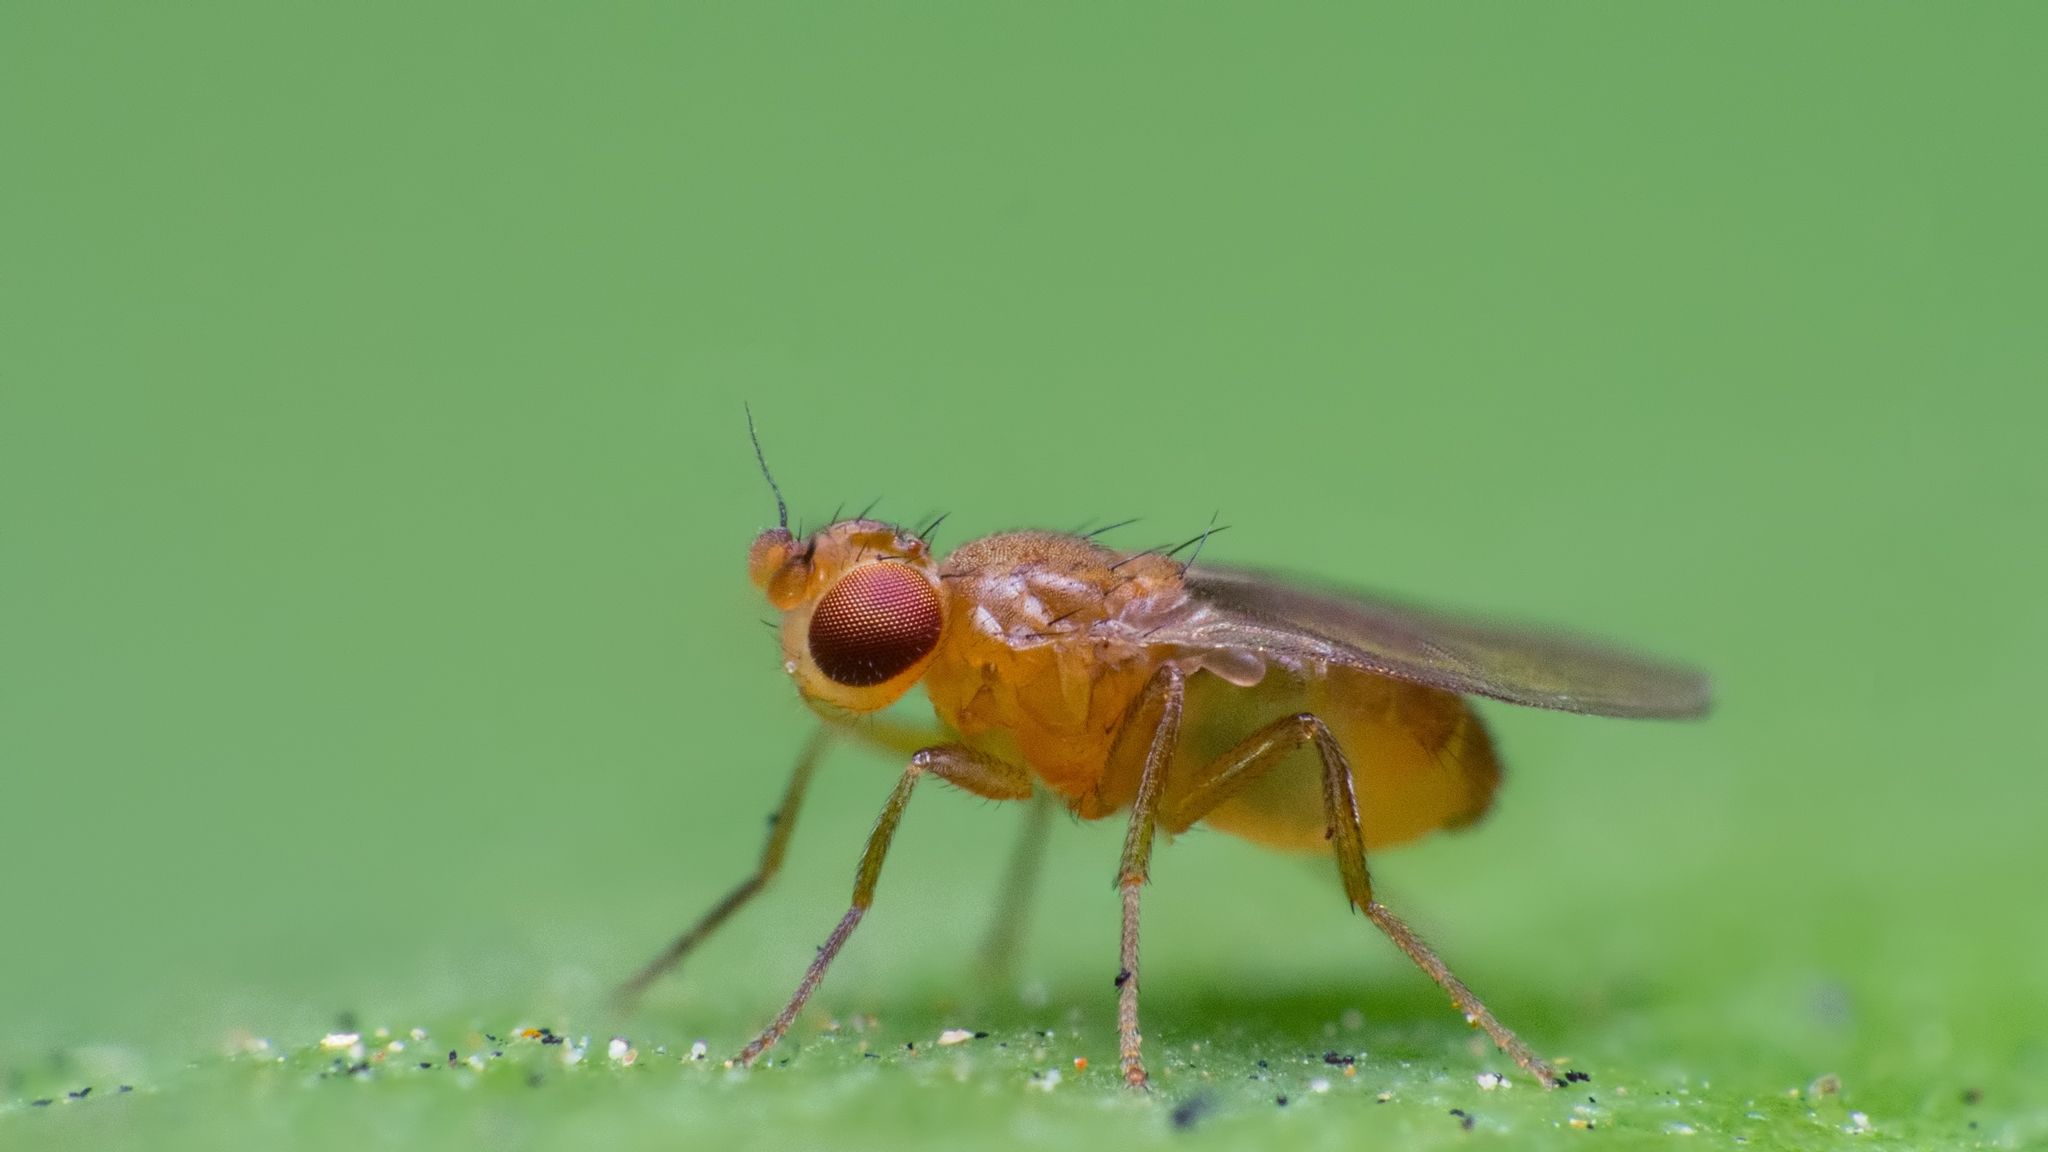 https://hips.hearstapps.com/hmg-prod/images/macro-of-a-drosophila-fruit-fly-royalty-free-image-1598887519.jpg?crop=1xw:0.75xh;center,top